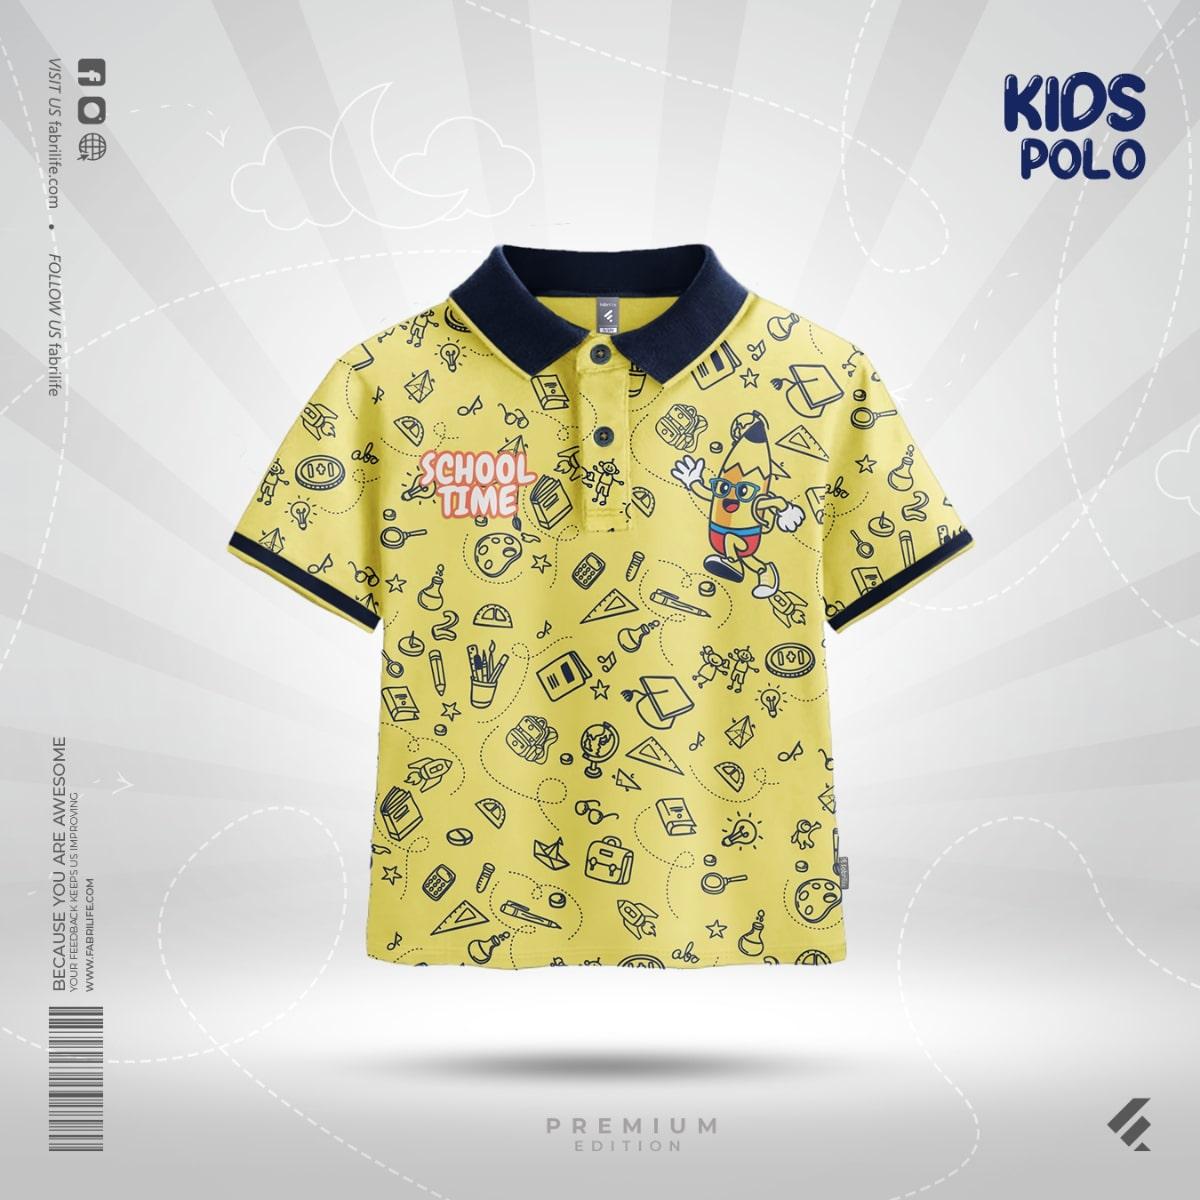 Kids Premium Polo T-Shirt - School Time